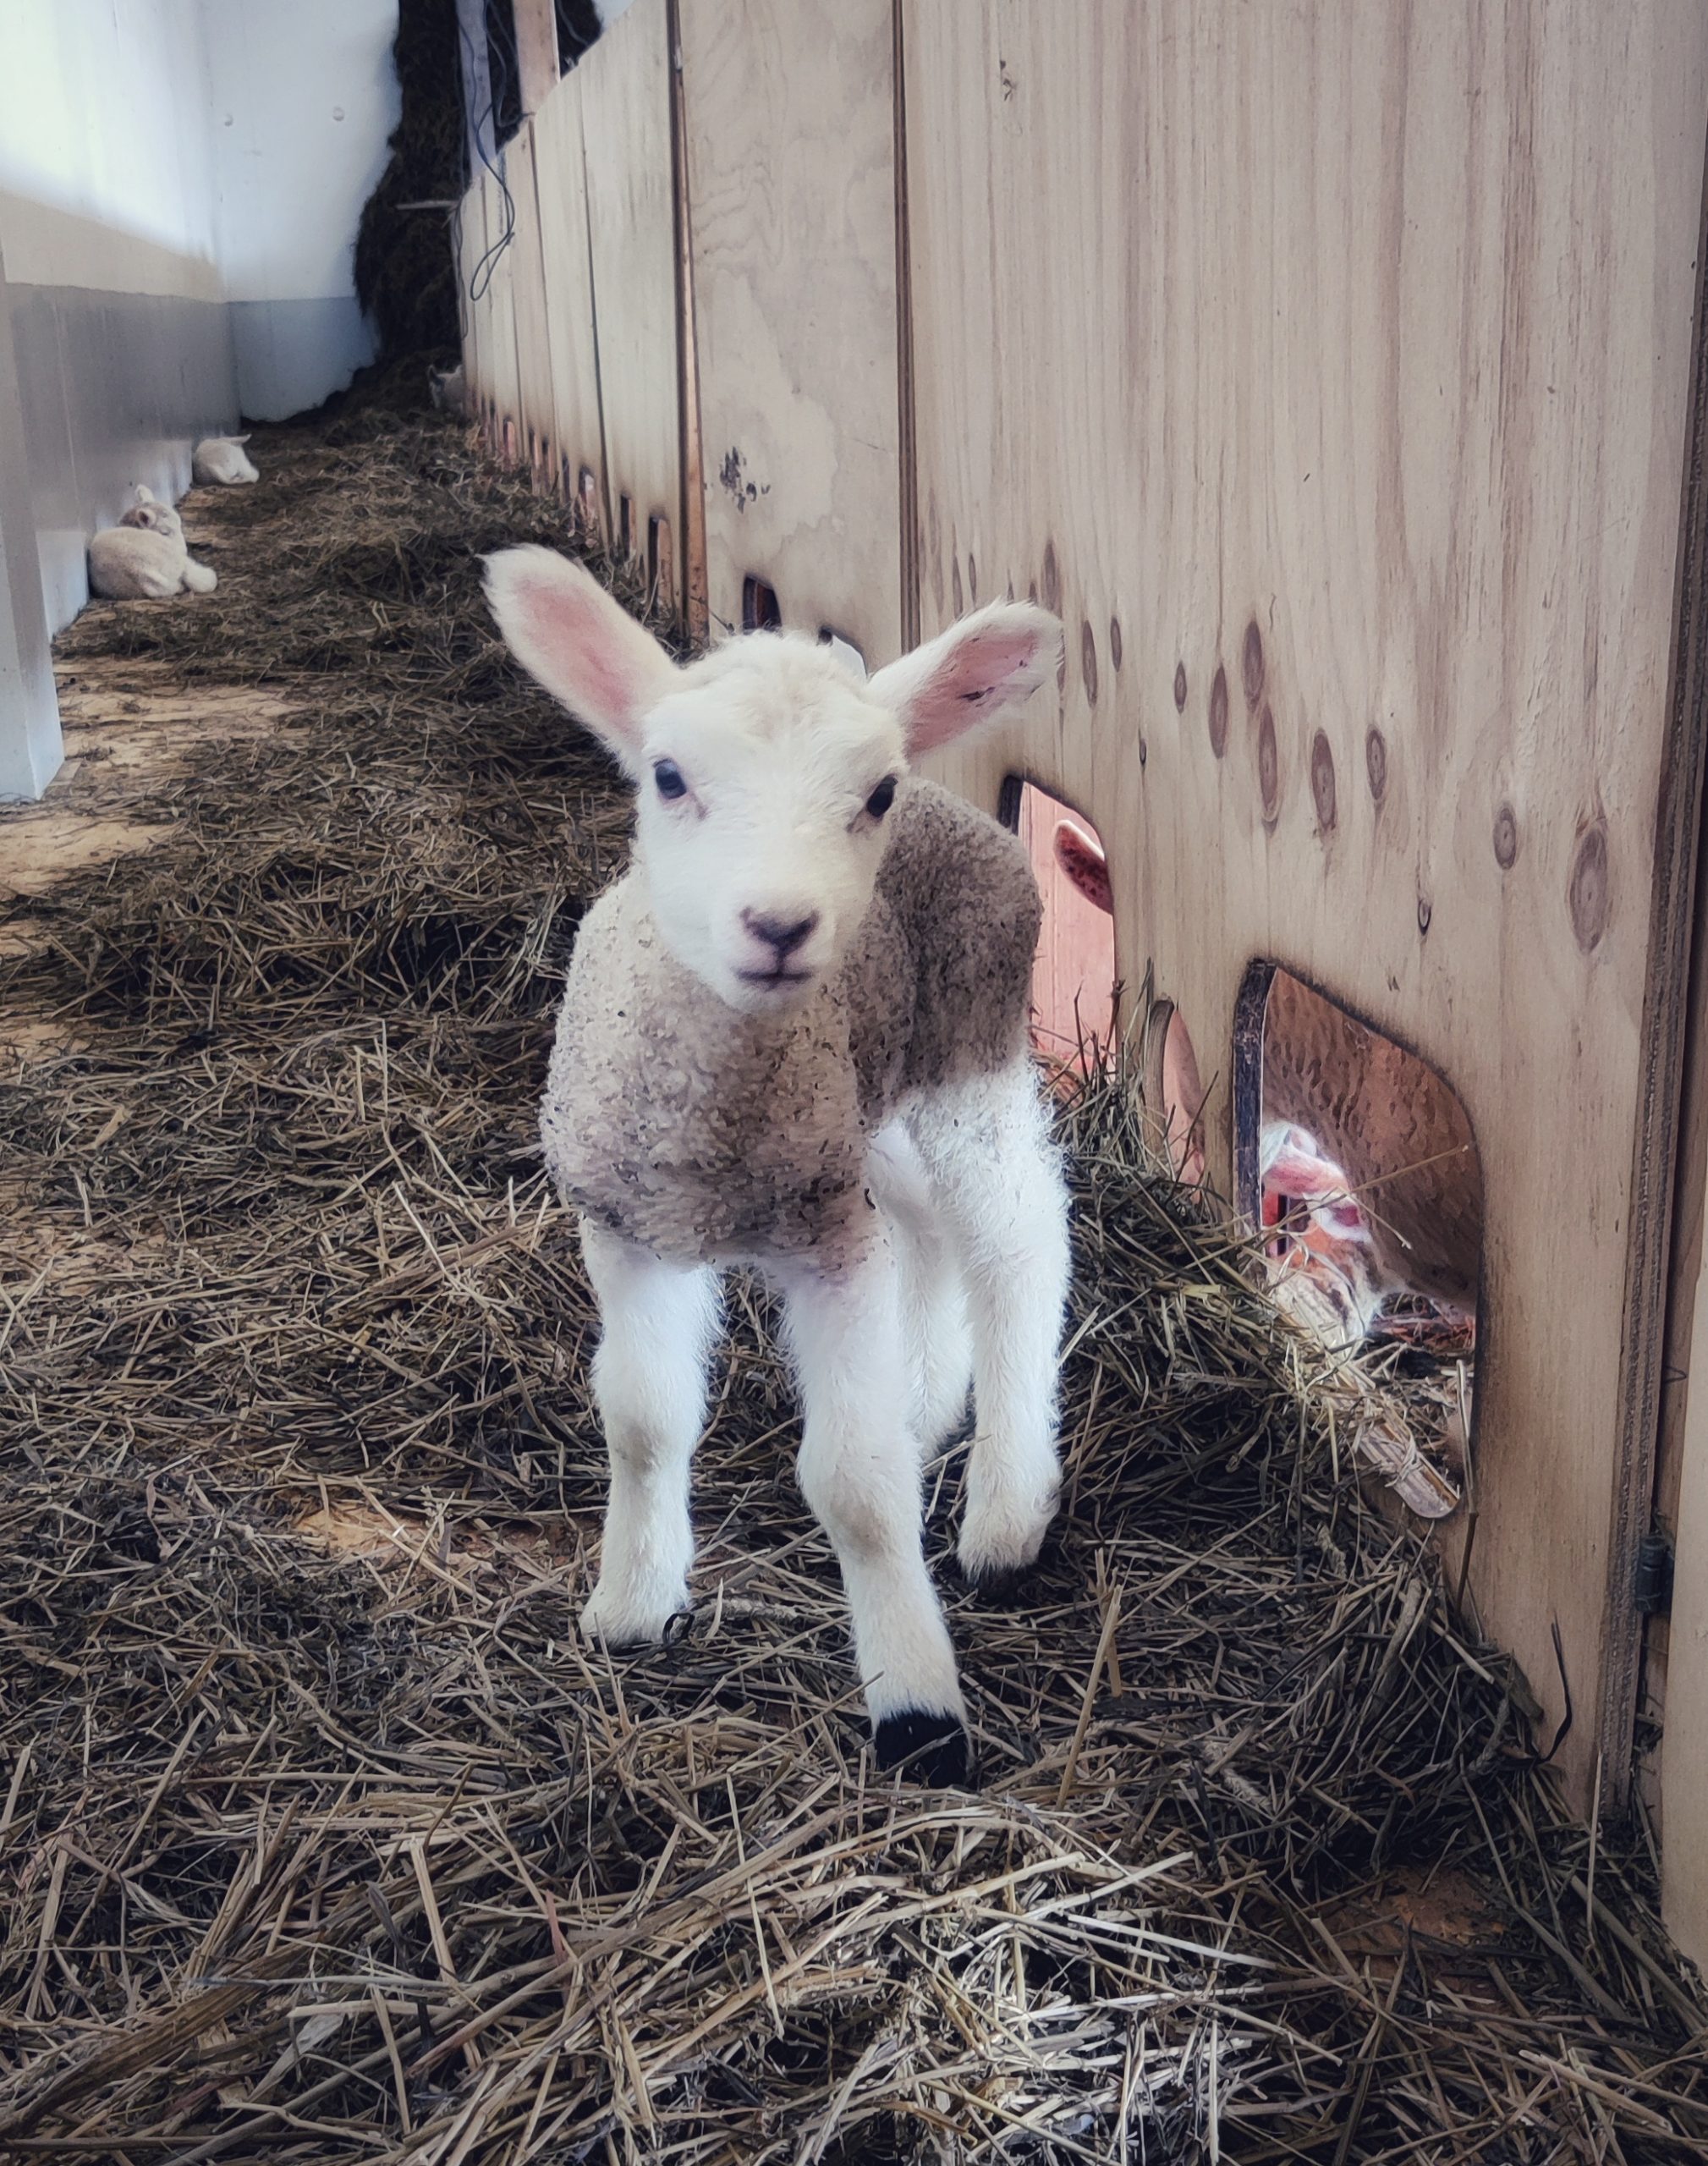 A little lamb